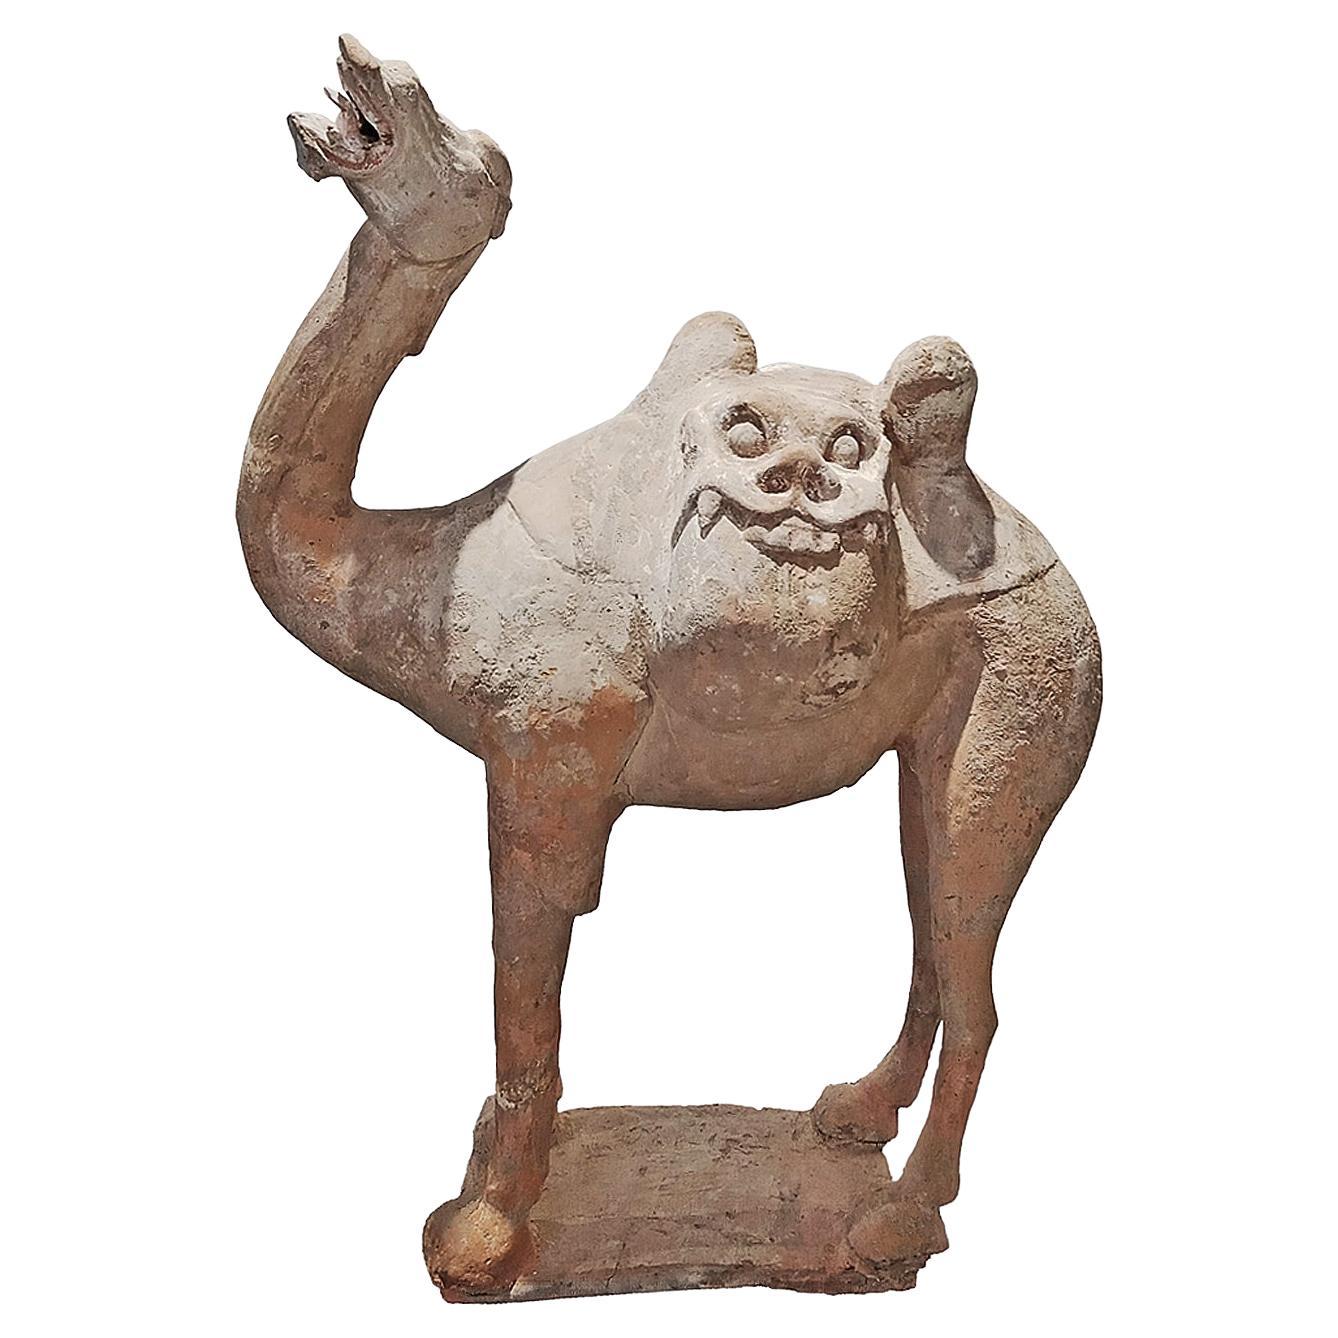 Sculpture de camel en terre cuite de la dynastie Tang, 1er siècle